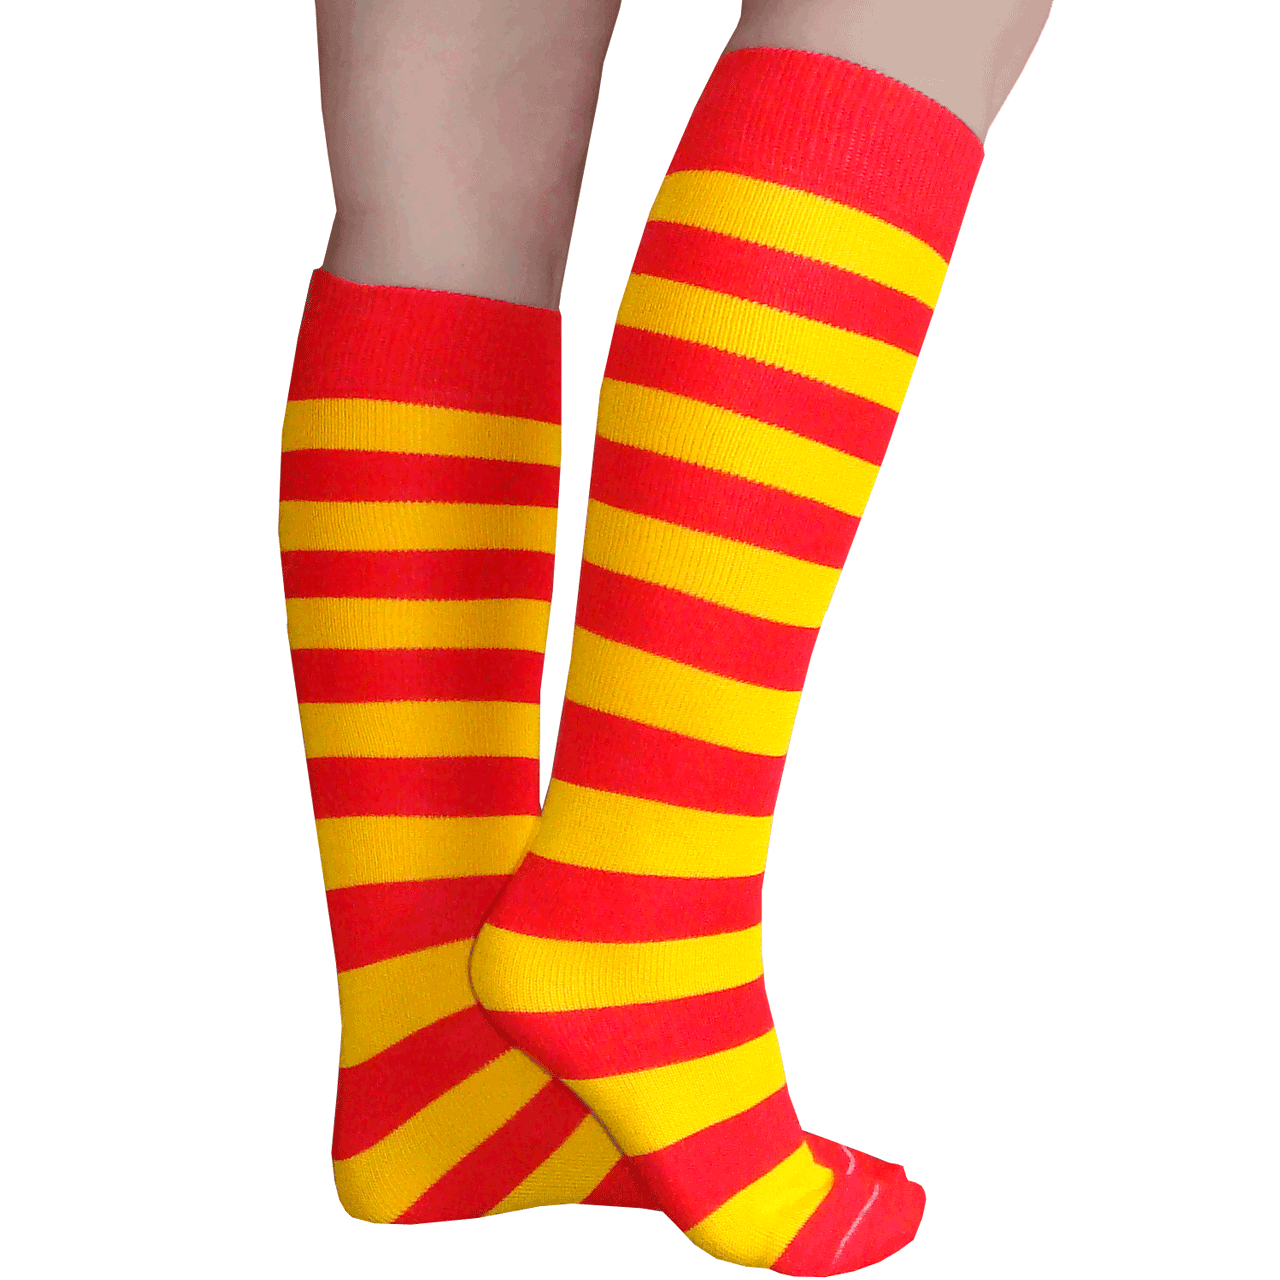 Red/Gold Striped Socks